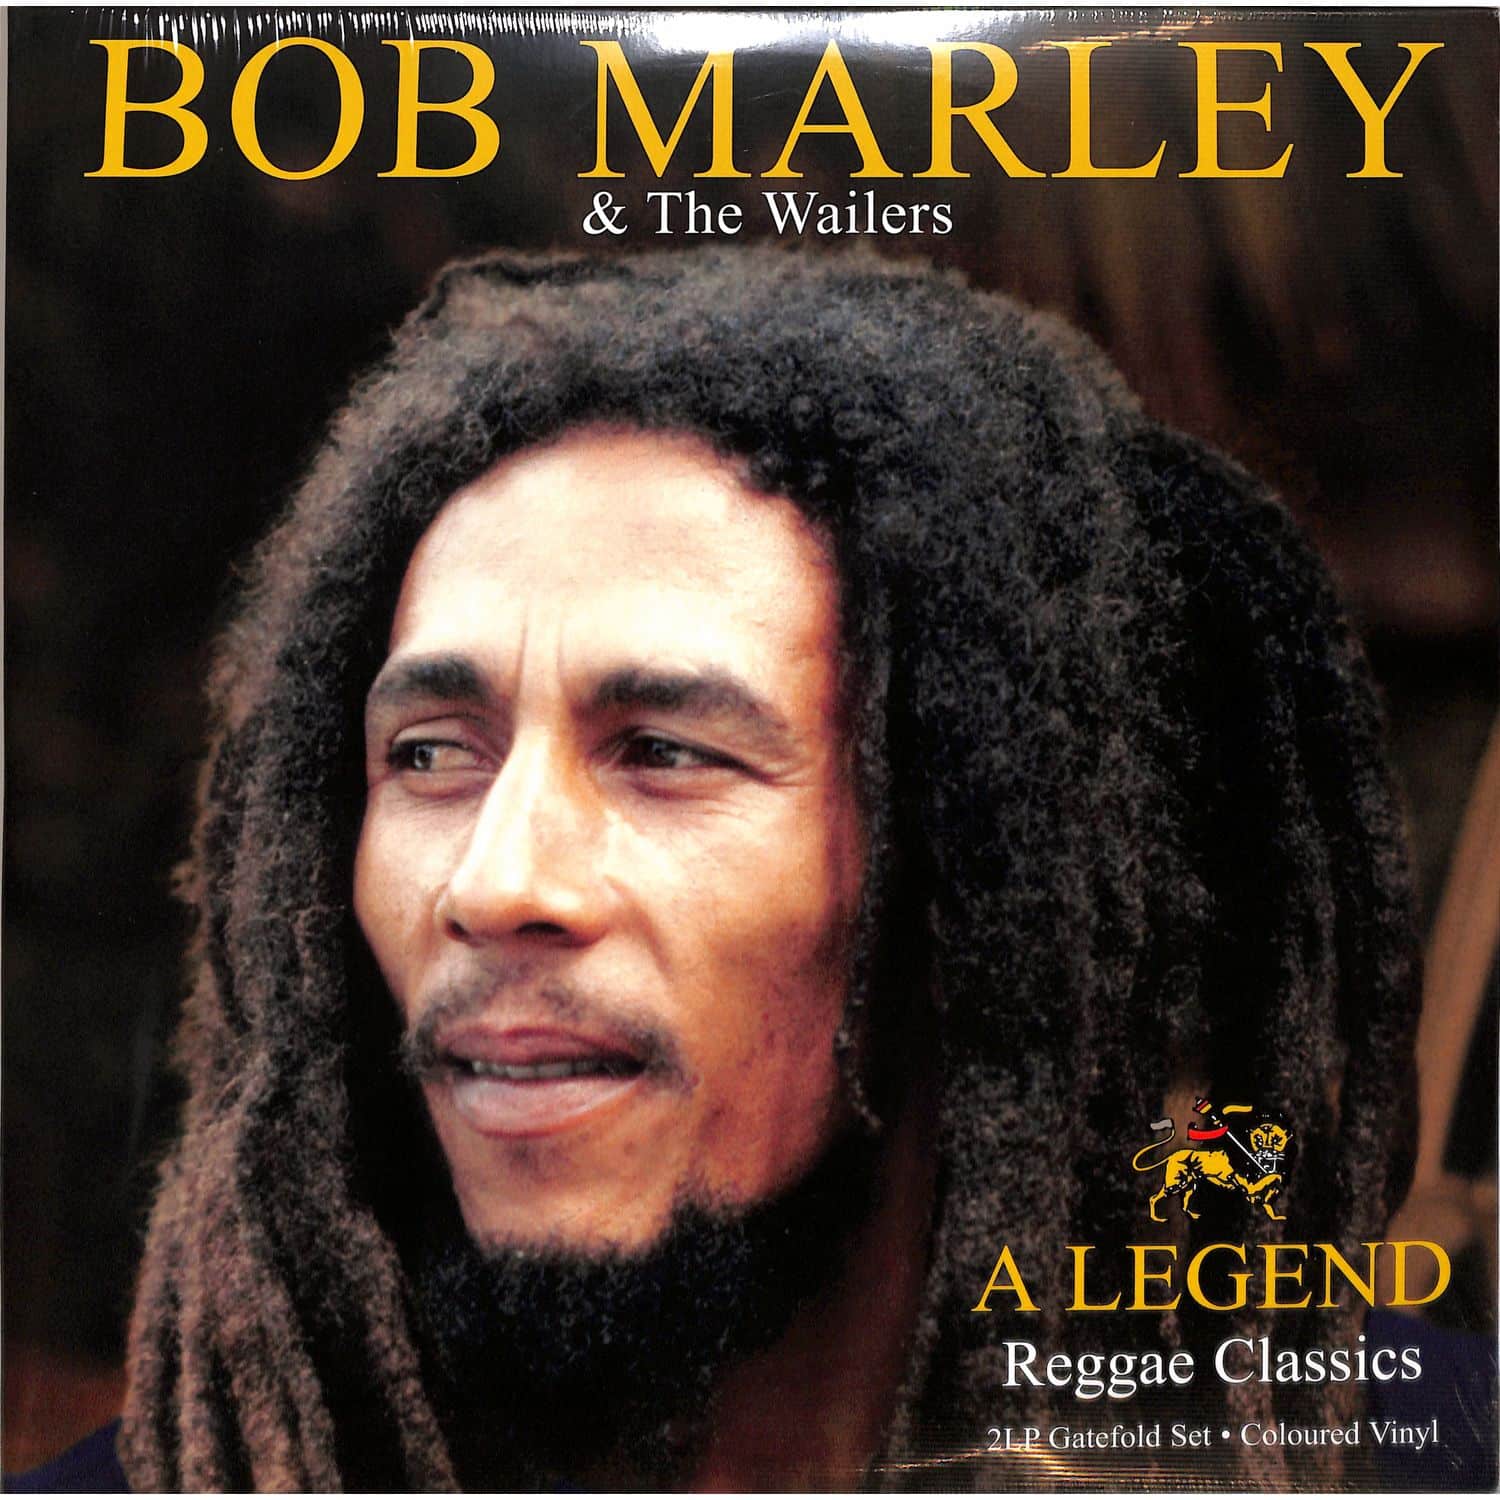 Bob Marley & The Wailers - A LEGEND - REGGAE CLASSICS 